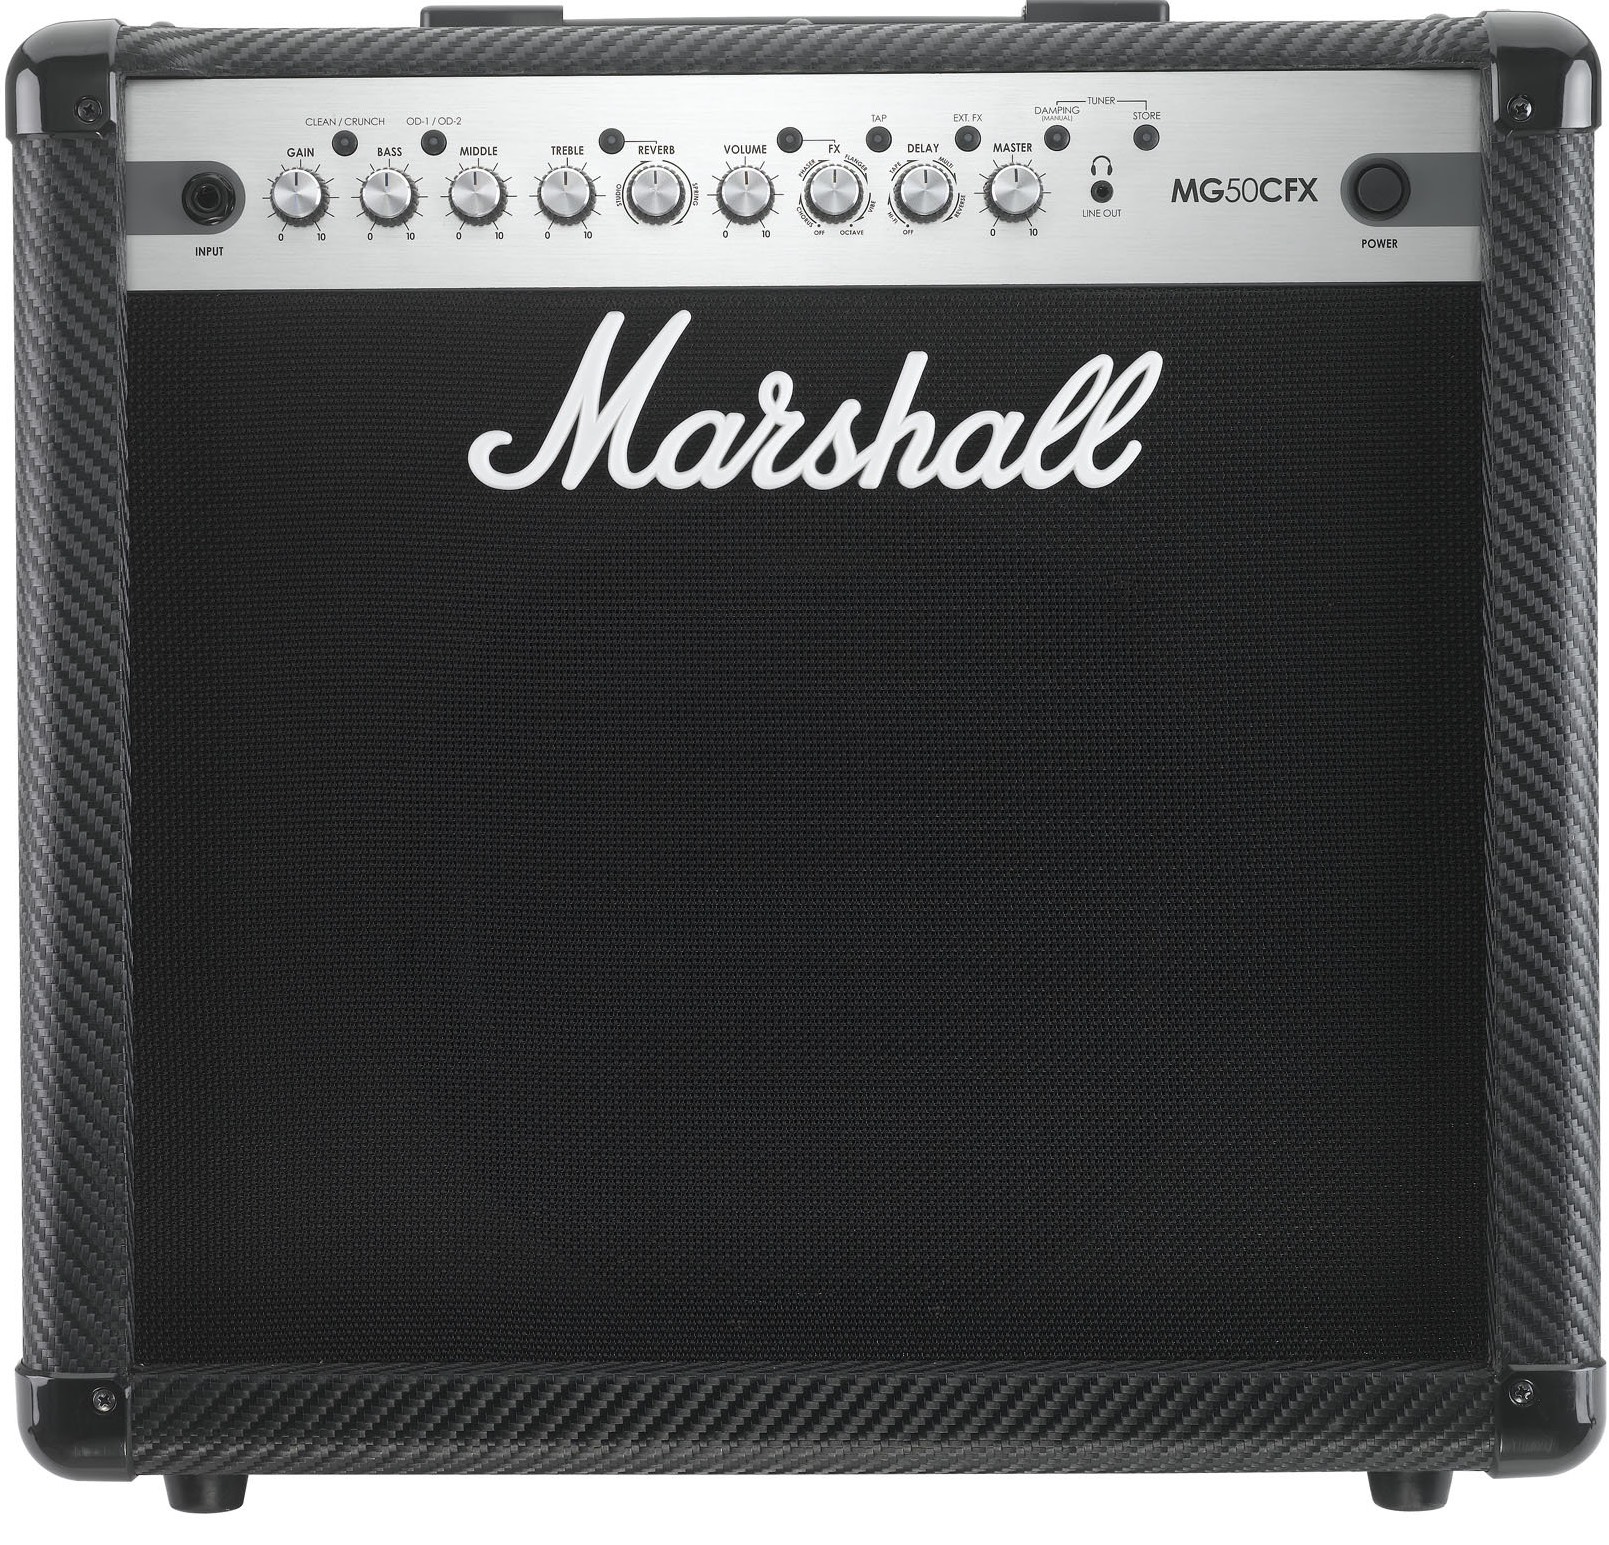 Marshall MG50CFX 50W Guitar Combo Amplifier